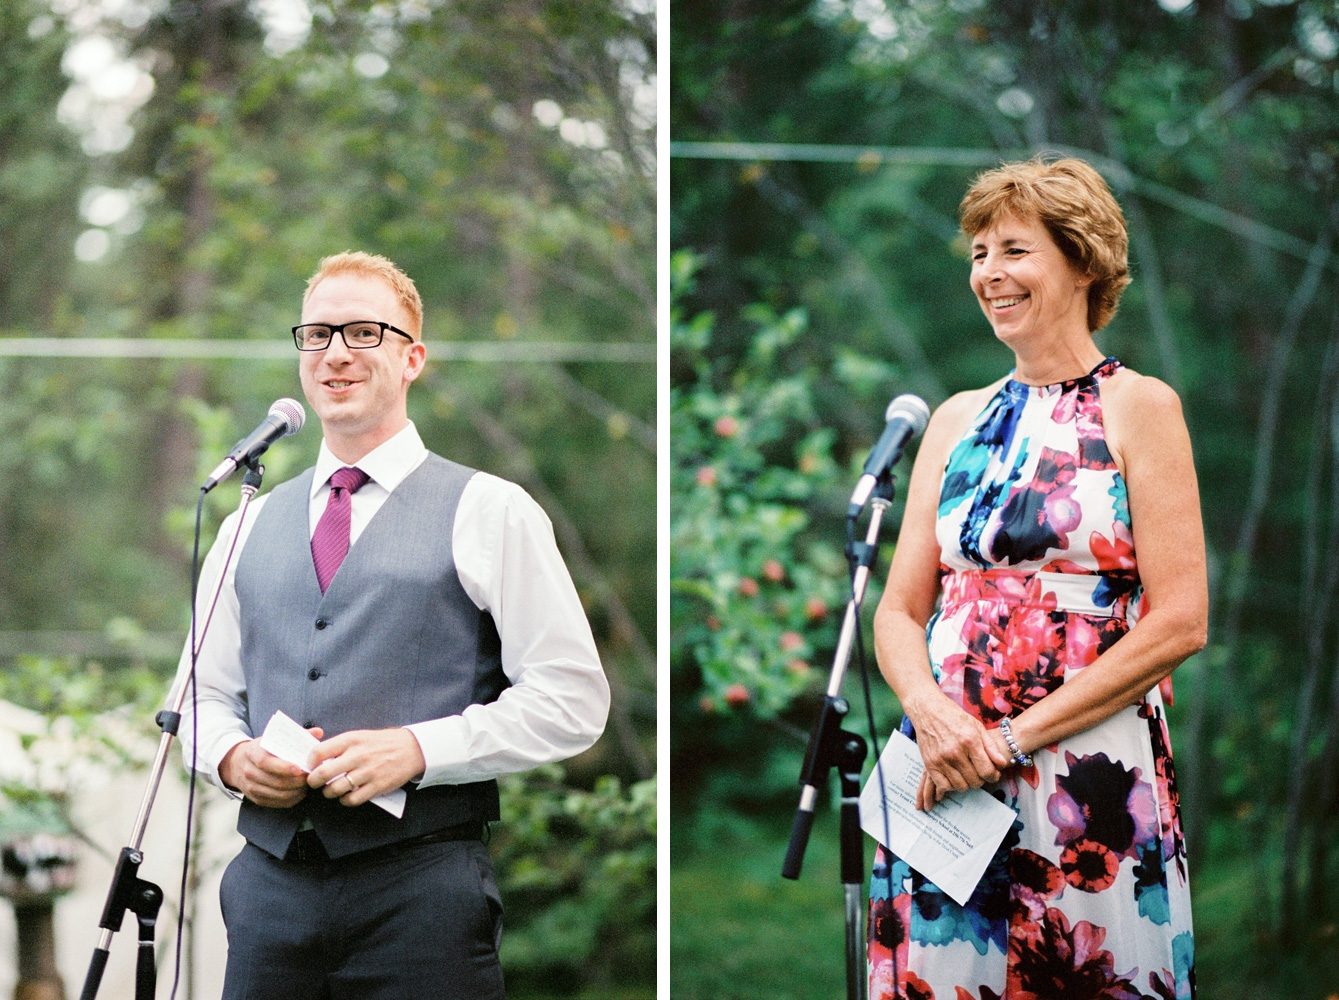 wedding-speeches-at-a-backyard-wedding.jpg